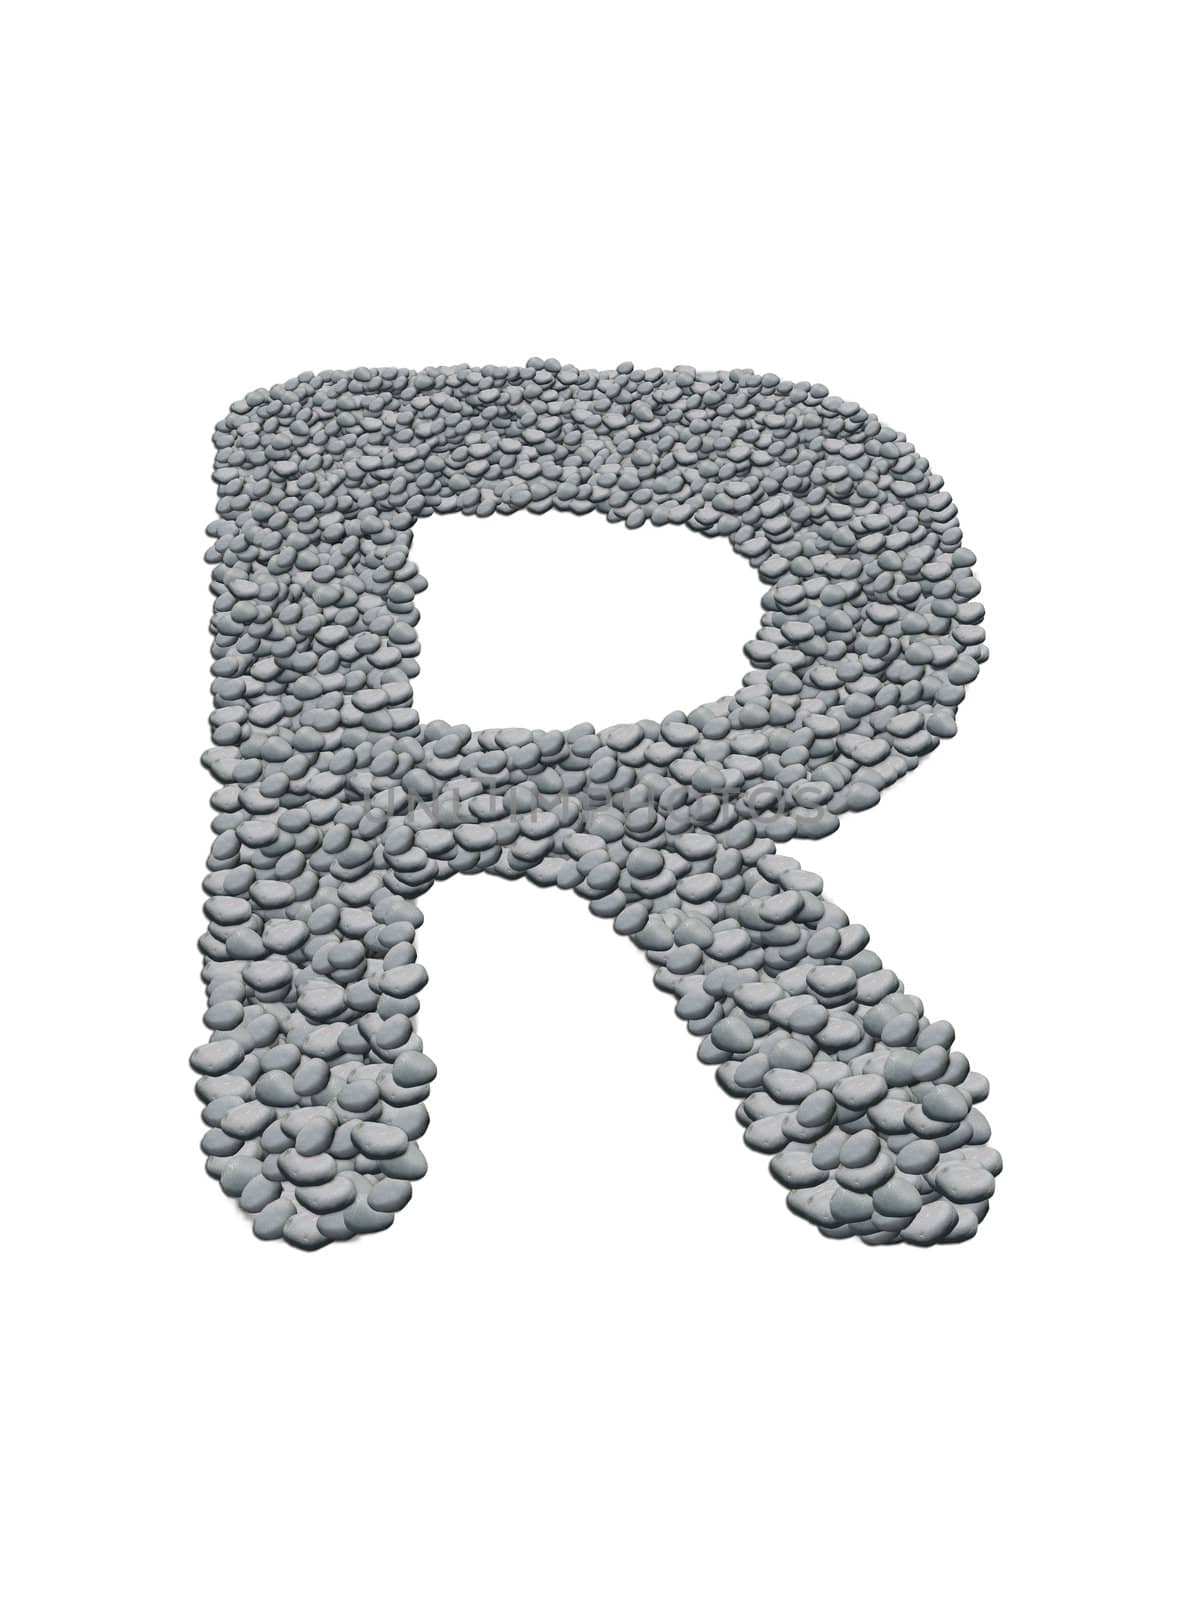 alphabet with stone texture on white background